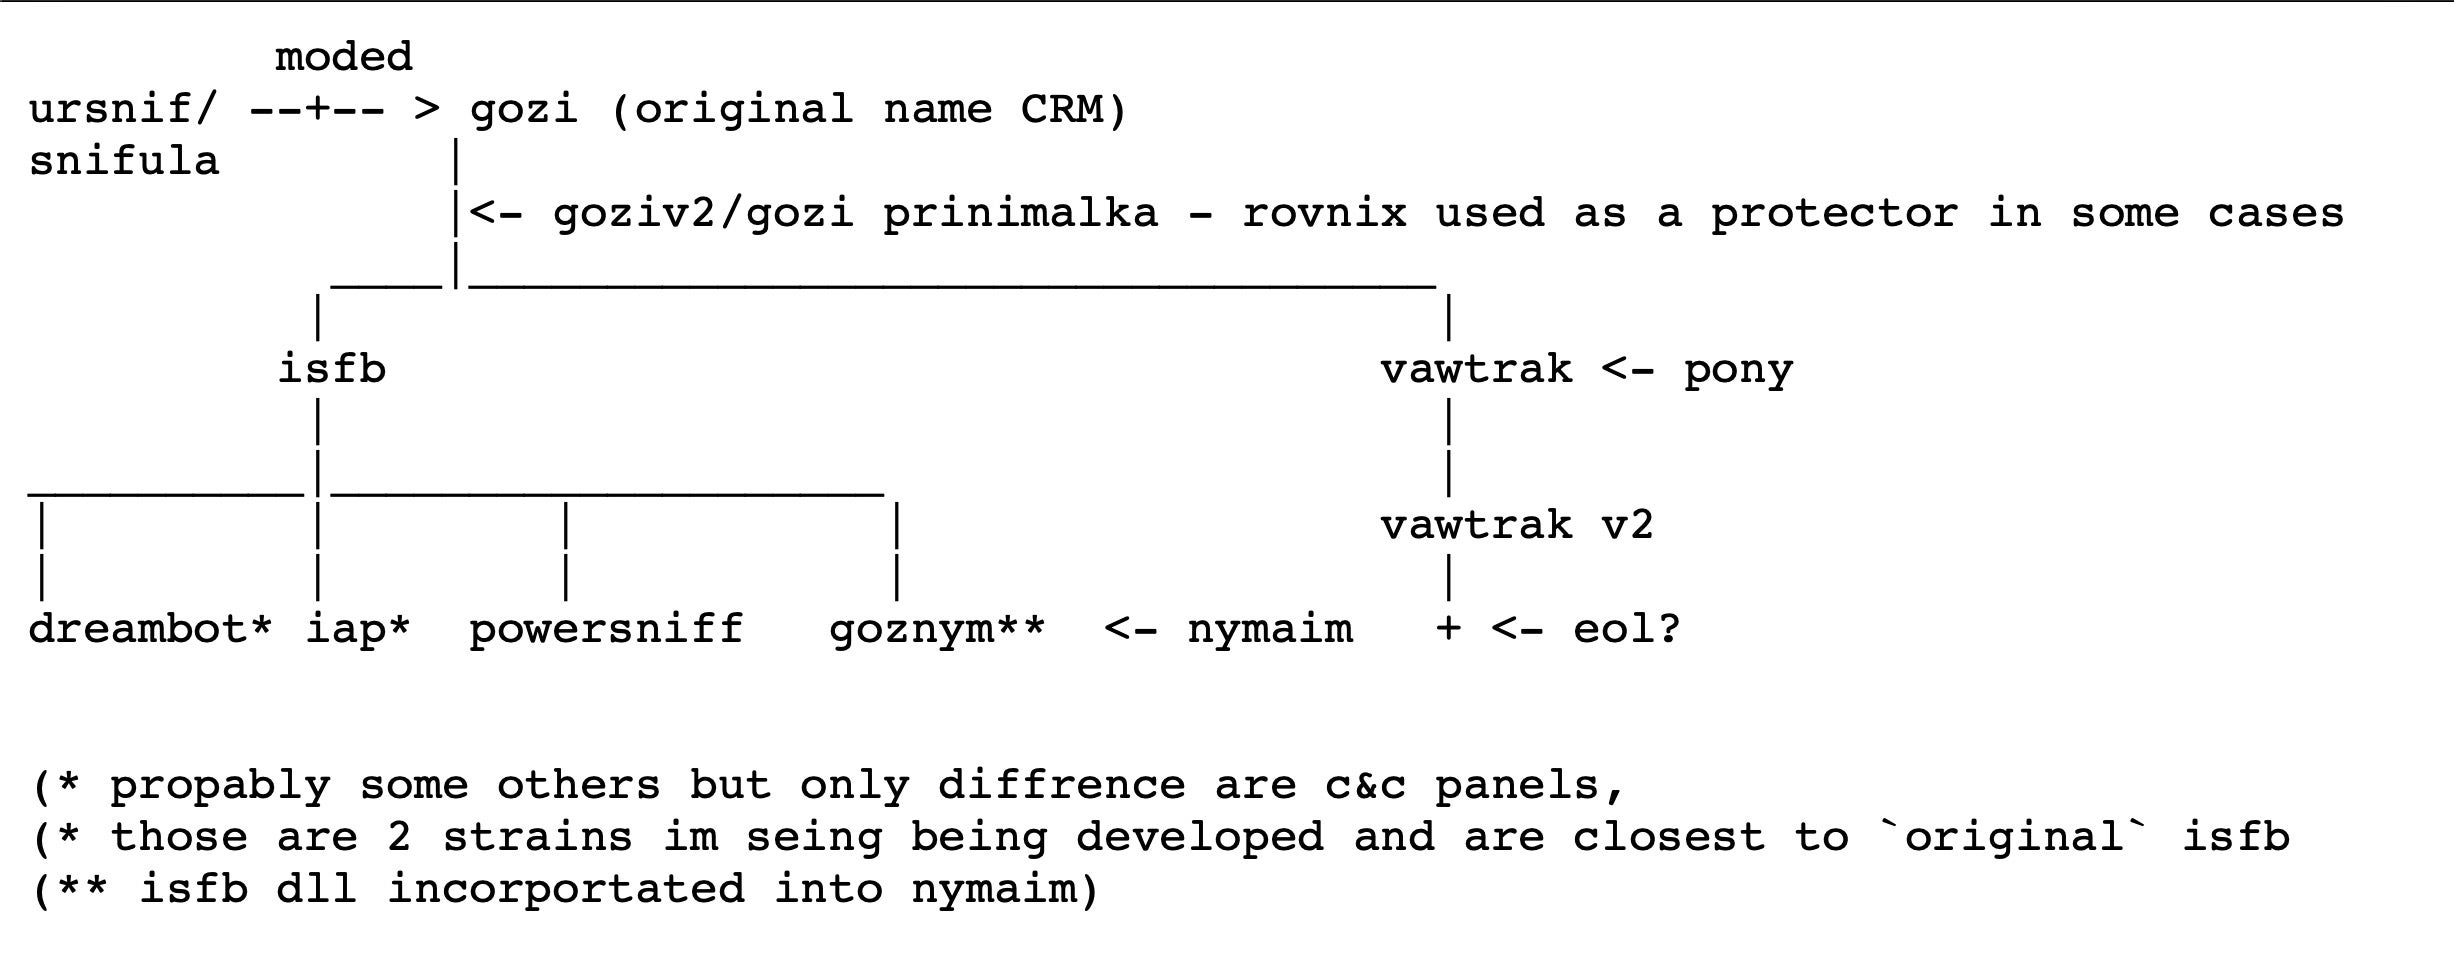 image of Gozi malware family tree